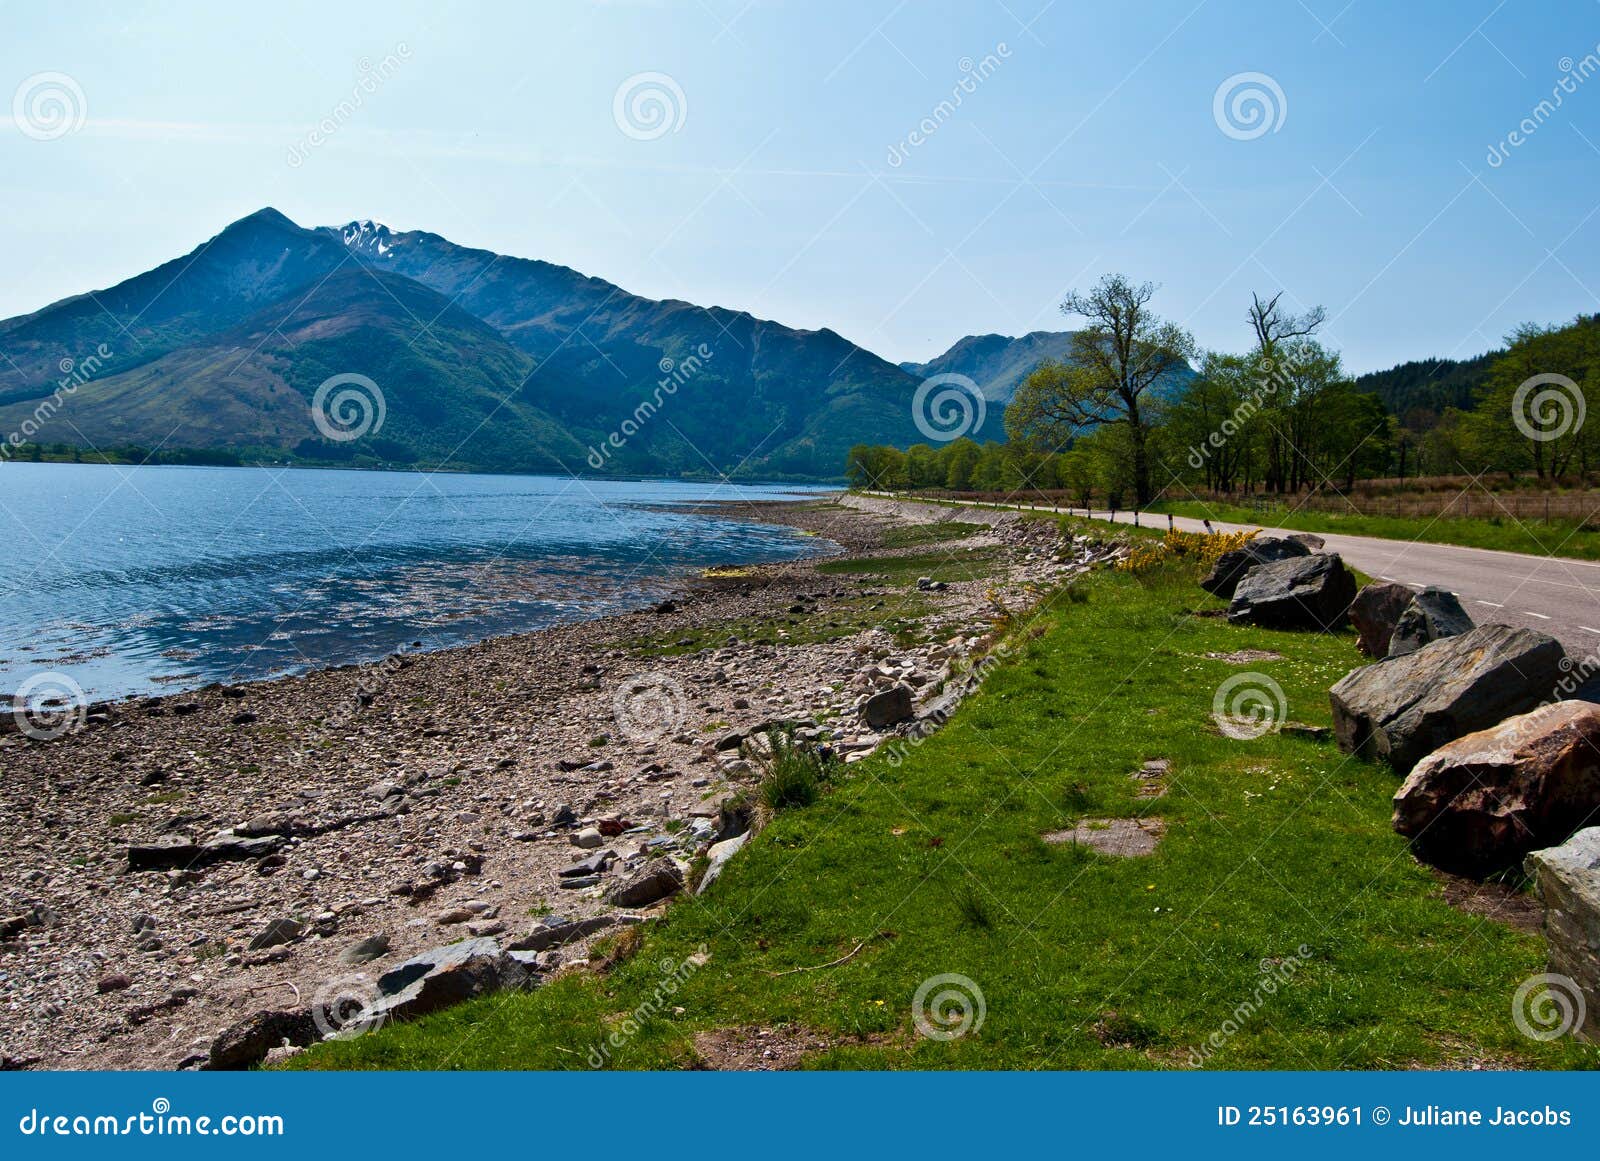 Loch Leven stock image. Image of scenery, landscape, scotland - 25163961